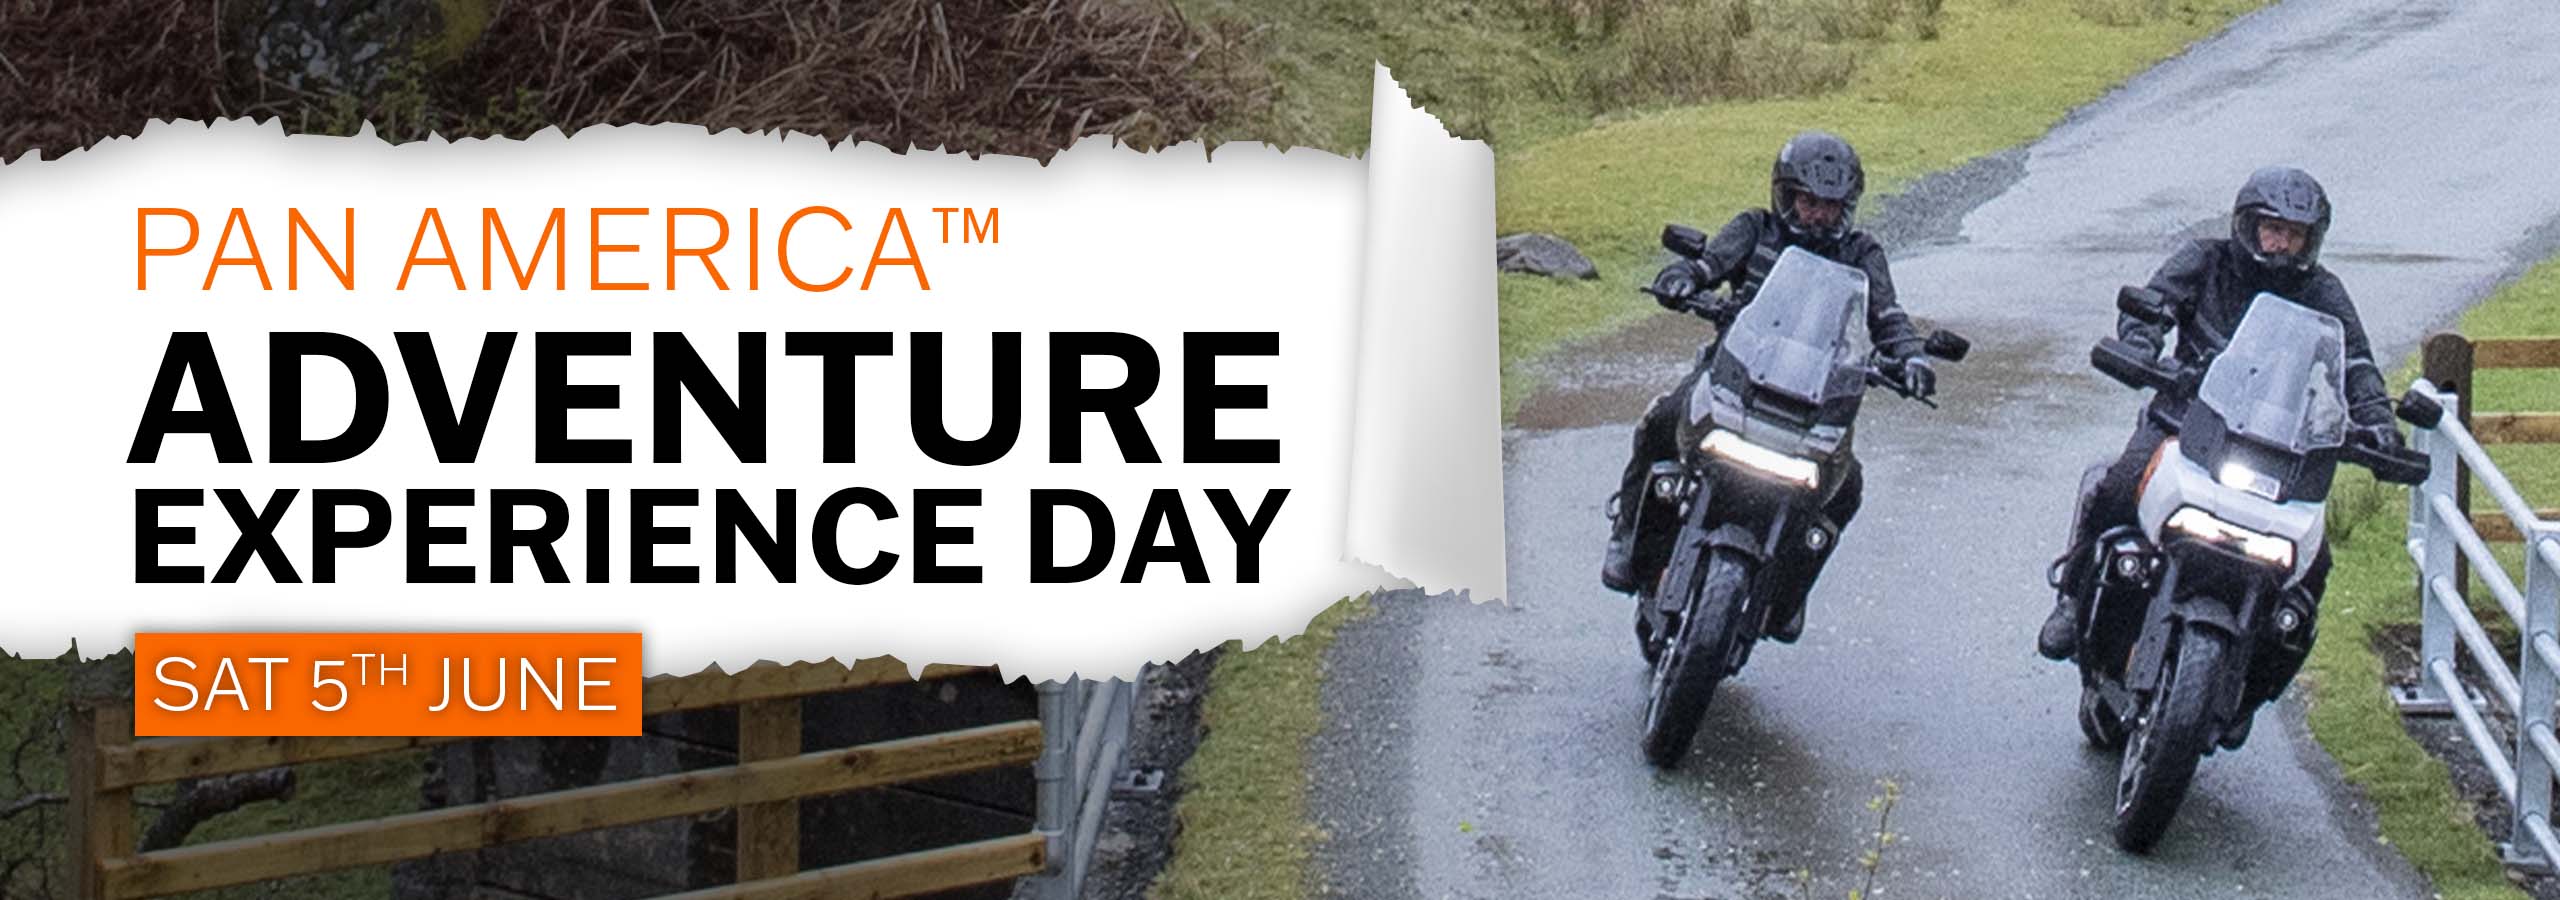 Maidstone Harley-Davidson Pan America Adventure Experience Day